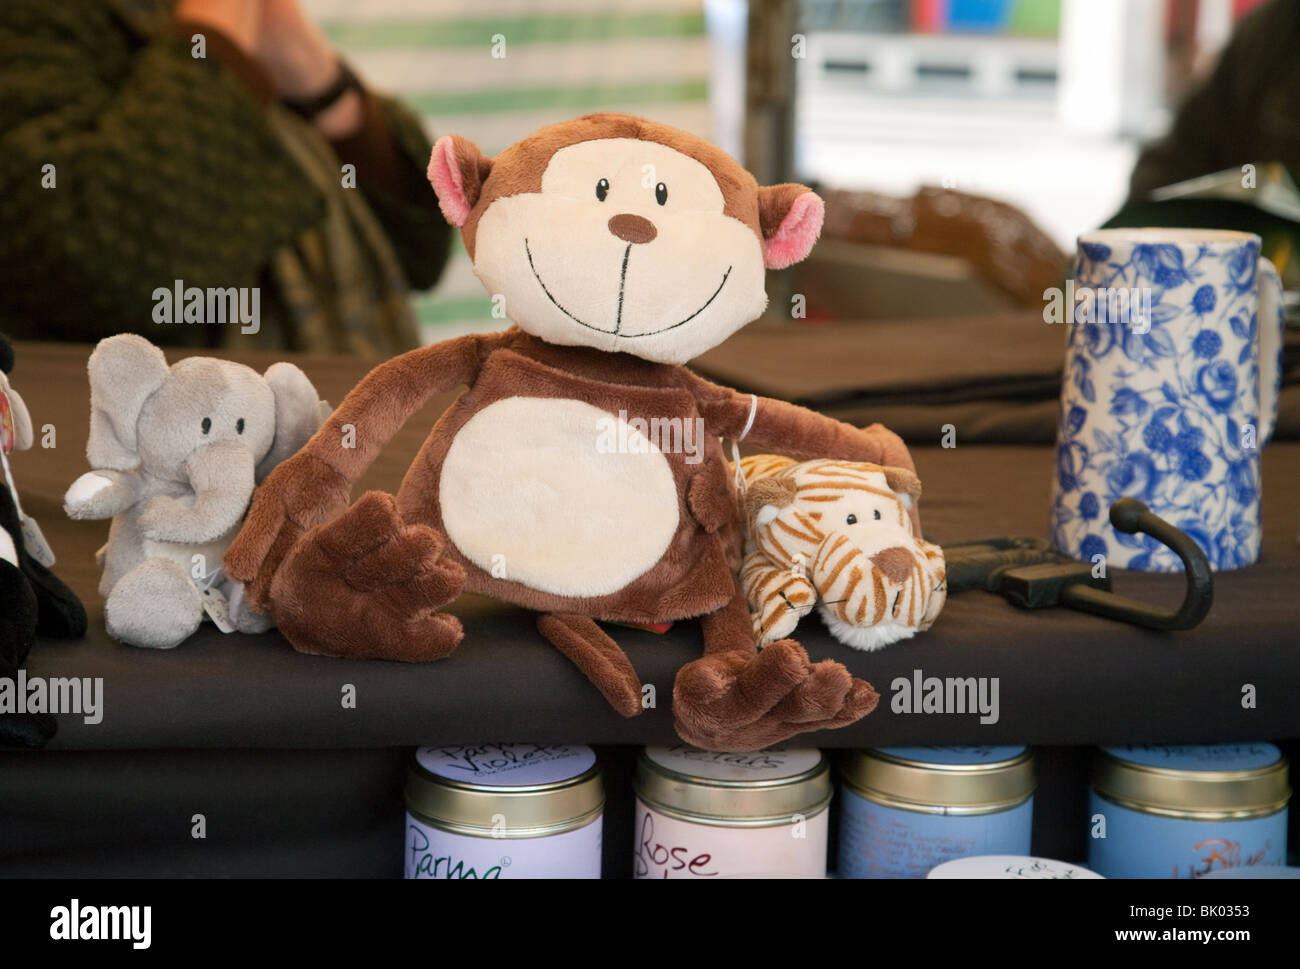 A stuffed monkey for sale, The market, Market Square, Cambridge, UK Stock Photo